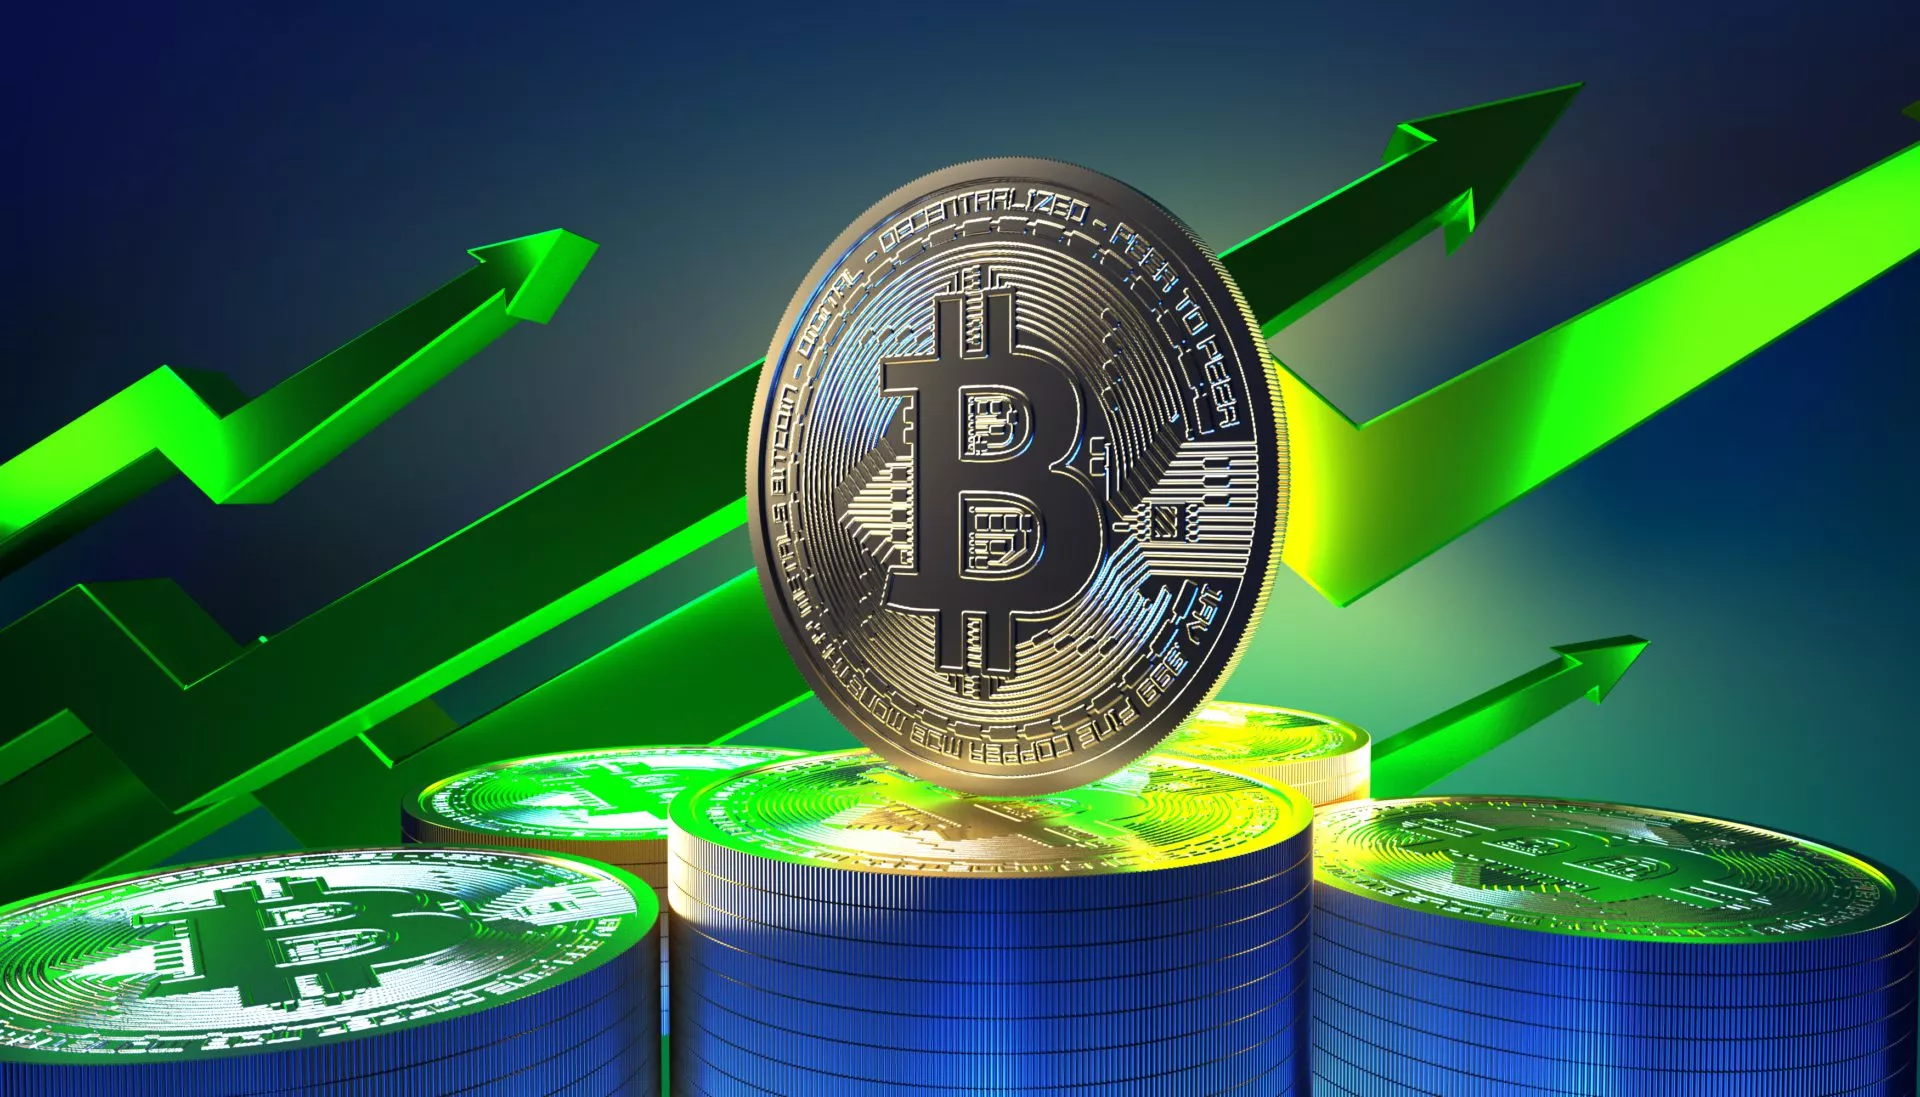 Credible Crypto blijft voorlopig bullish over Bitcoin